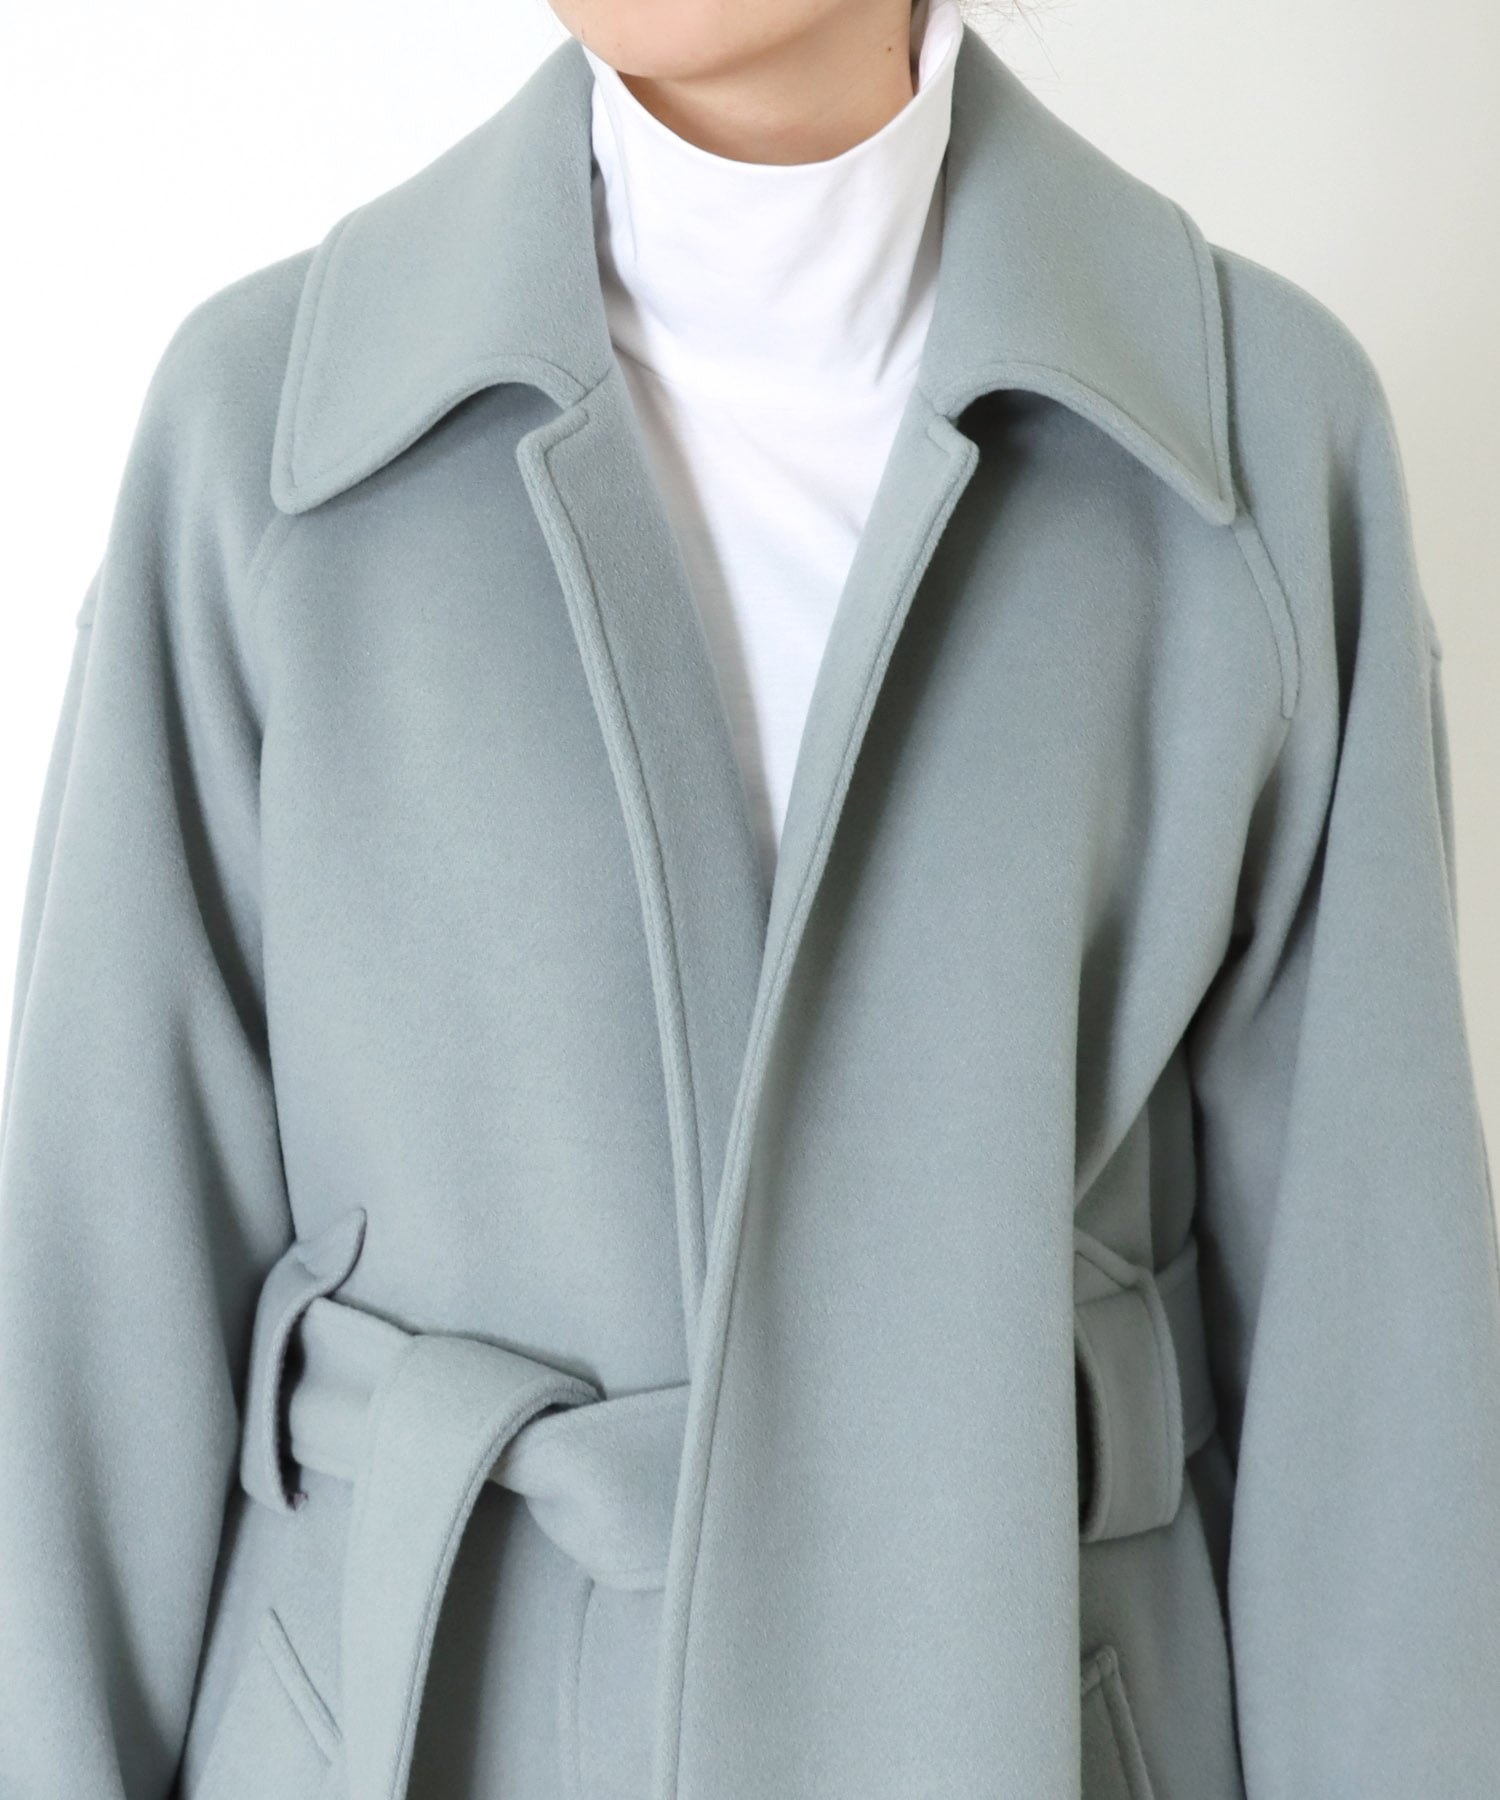 MANTECO color long coat